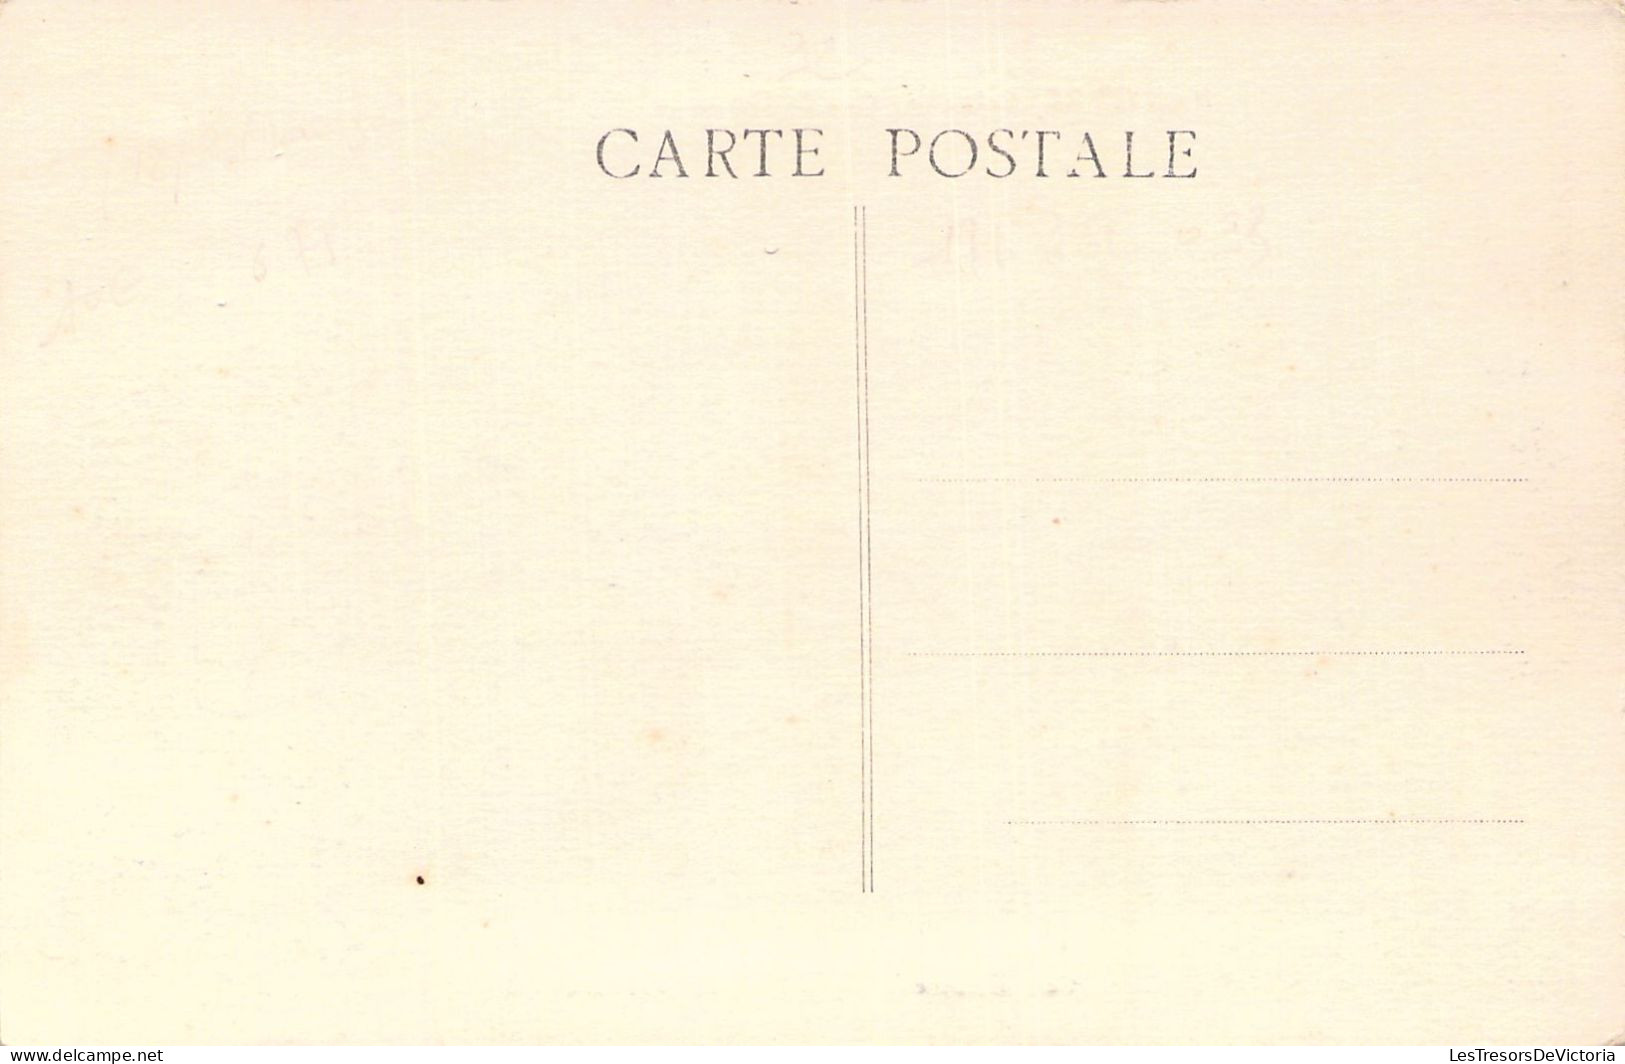 FRANCE - 92 -NANTERRE - (Seine) - Rue St Germain - Carte Postale Ancienne - Nanterre